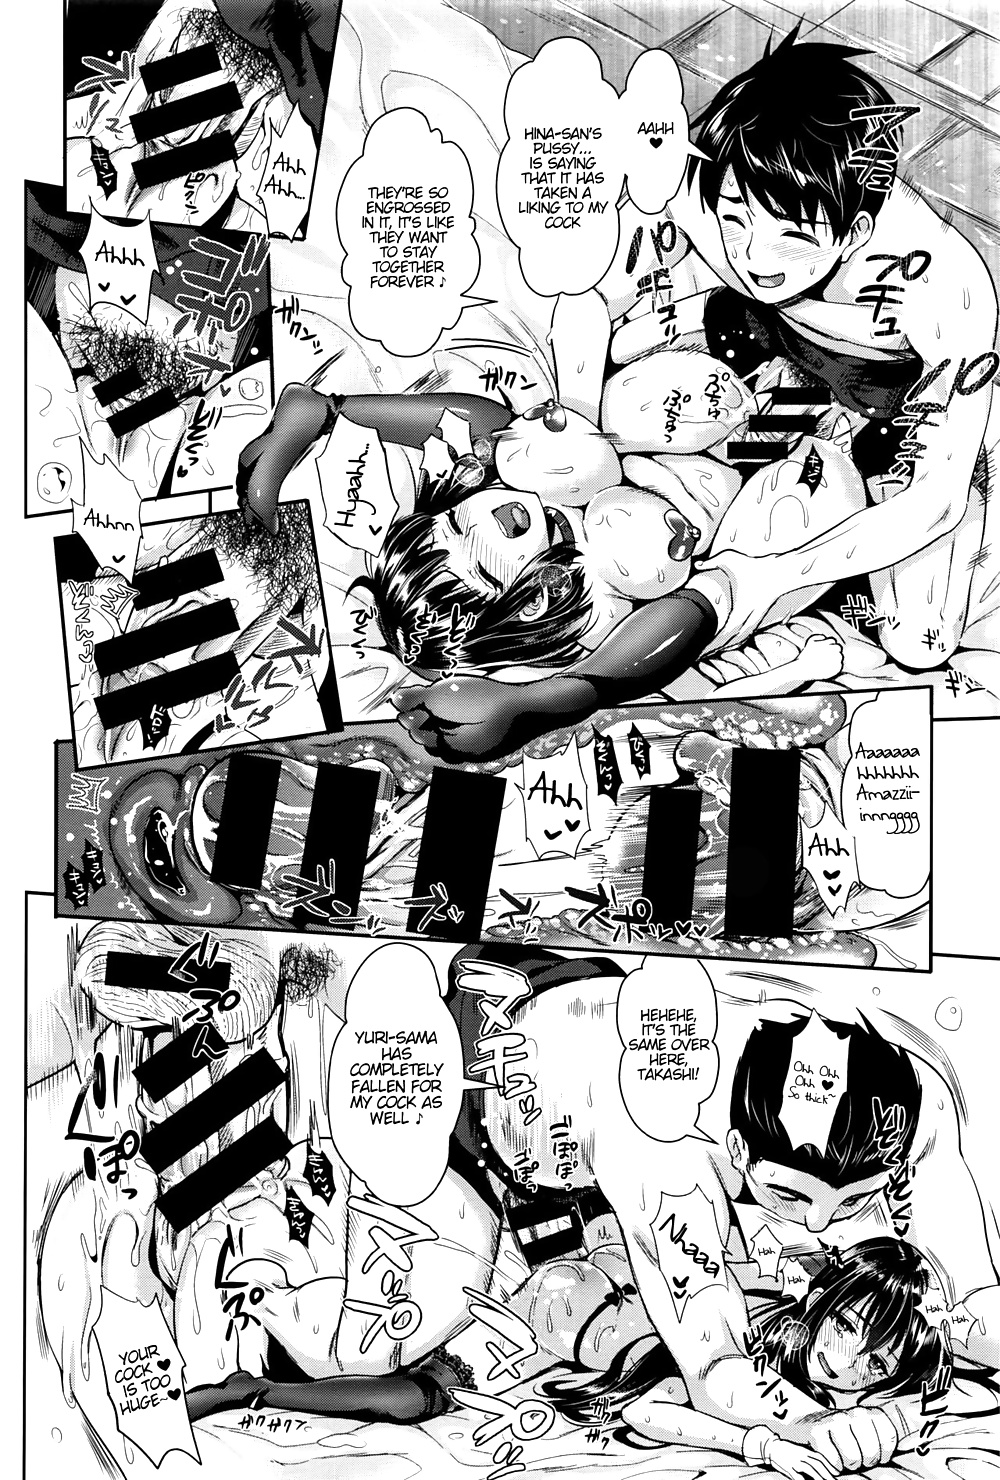 Let's Party - Hentai Manga (18/30)